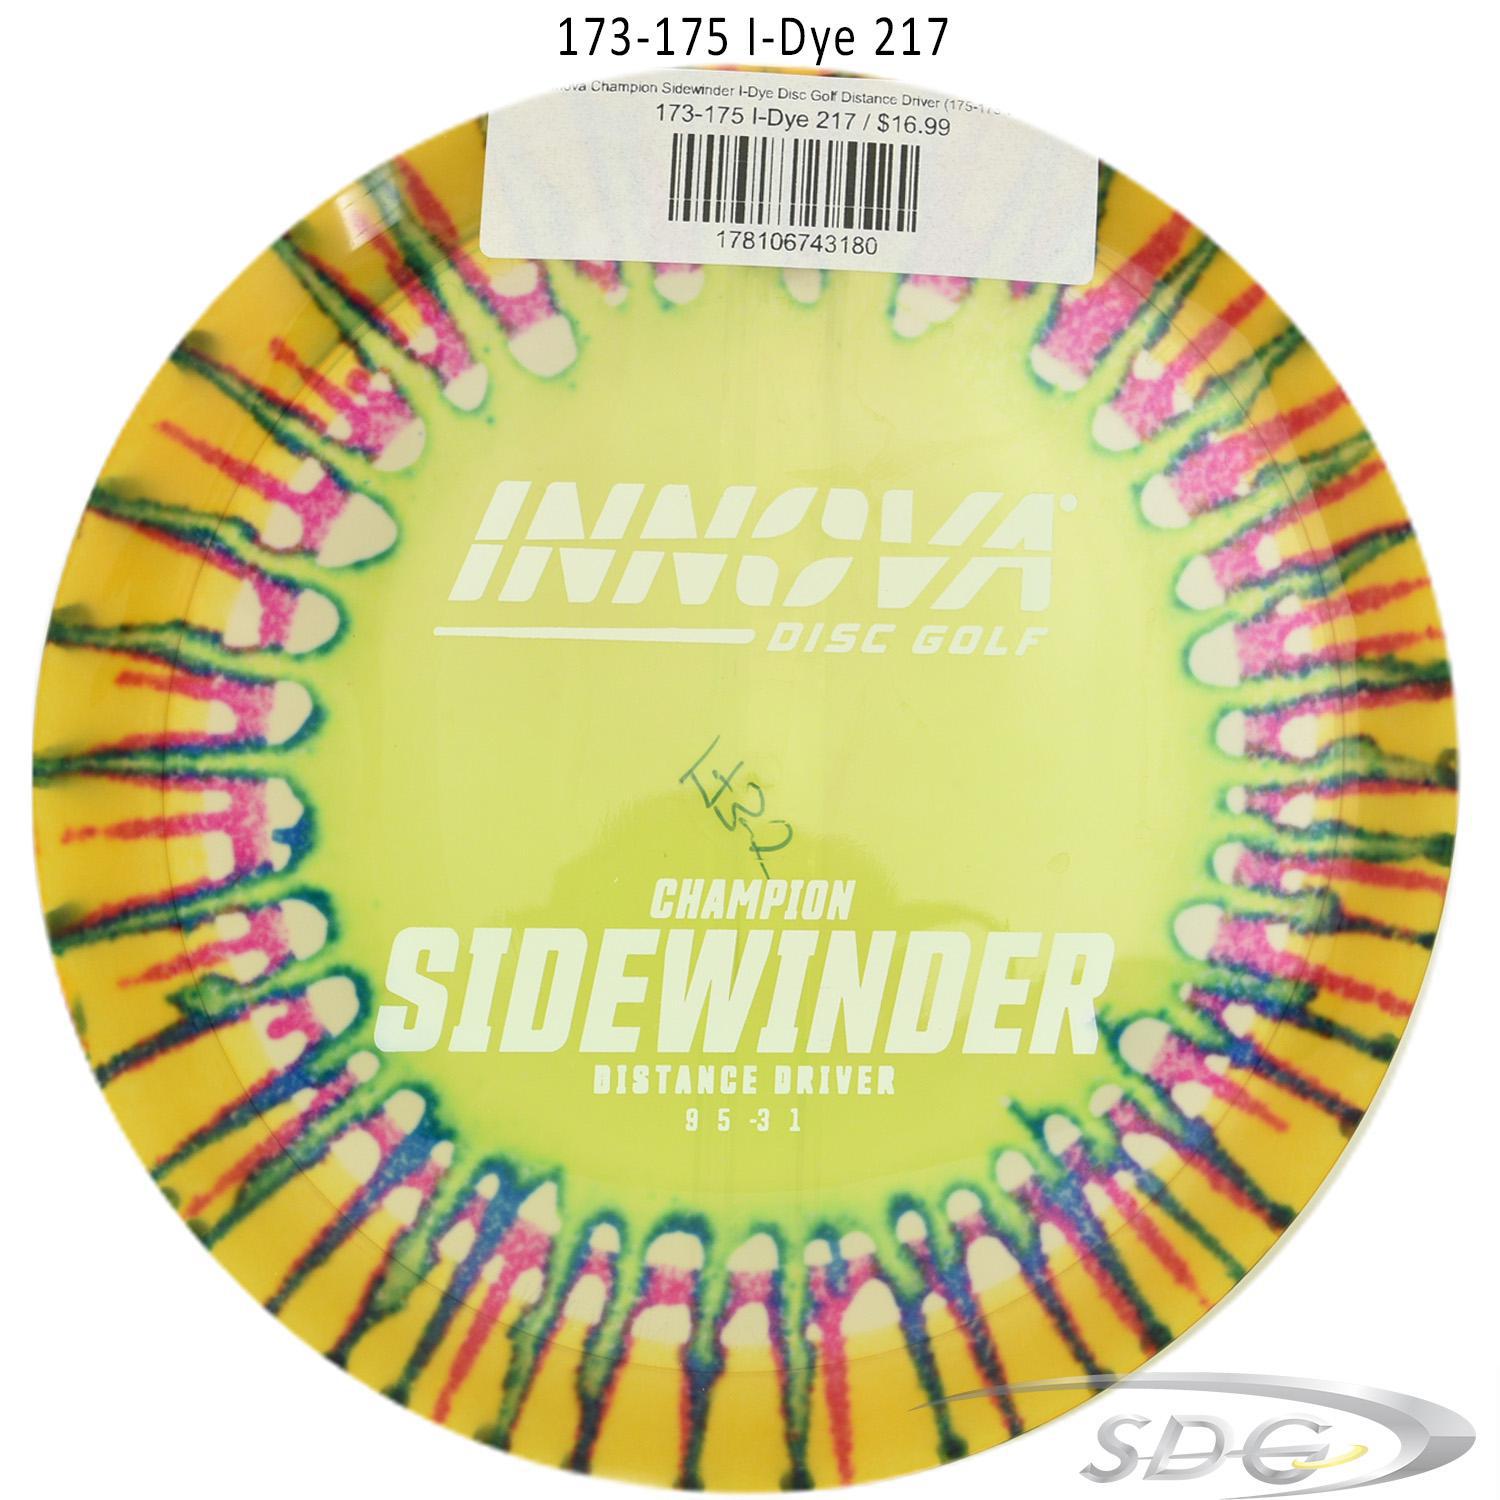 innova-champion-sidewinder-i-dye-disc-golf-distance-driver 173-175 I-Dye 217 